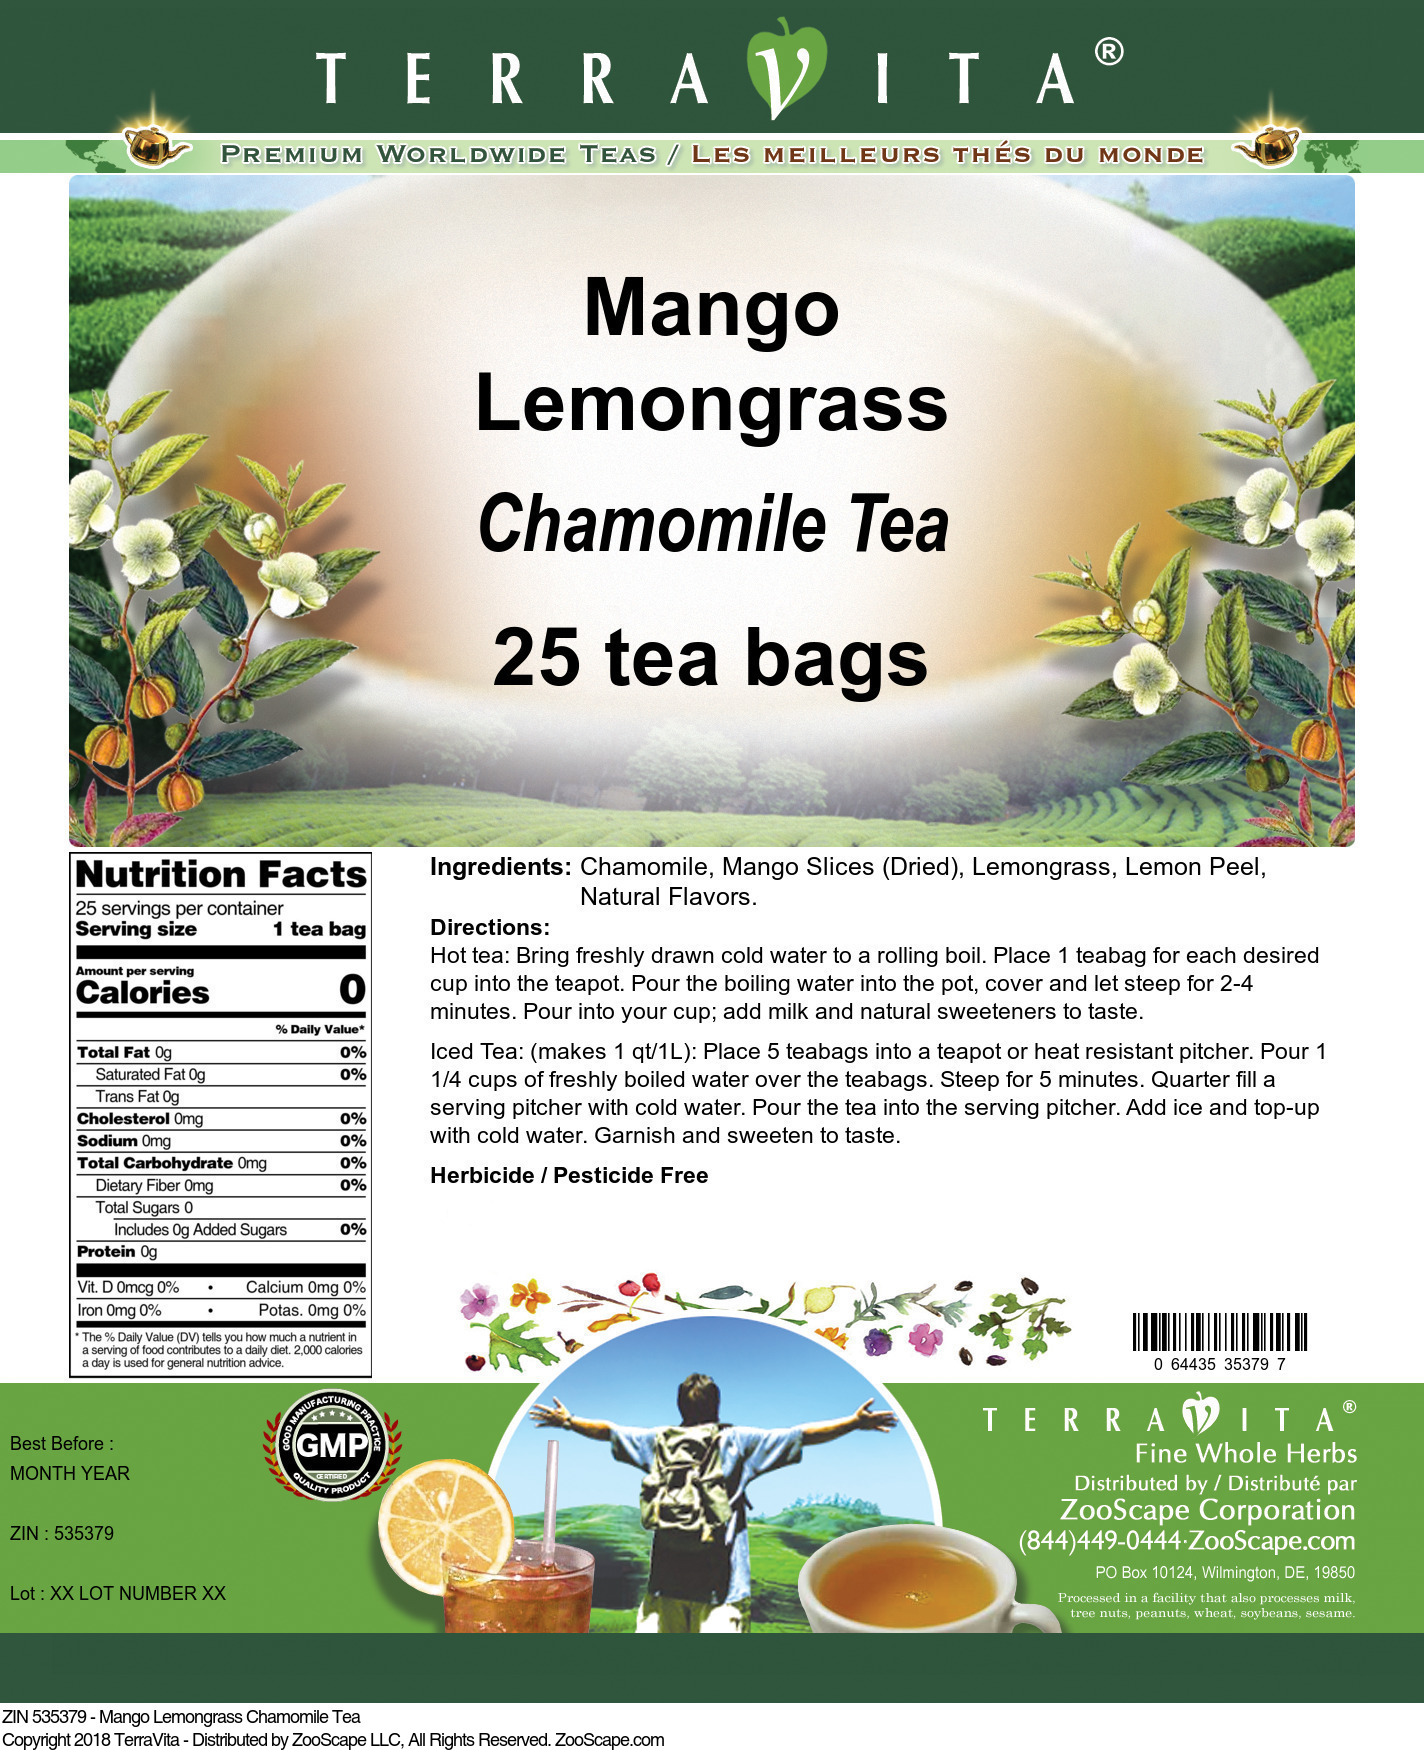 Mango Lemongrass Chamomile Tea - Label